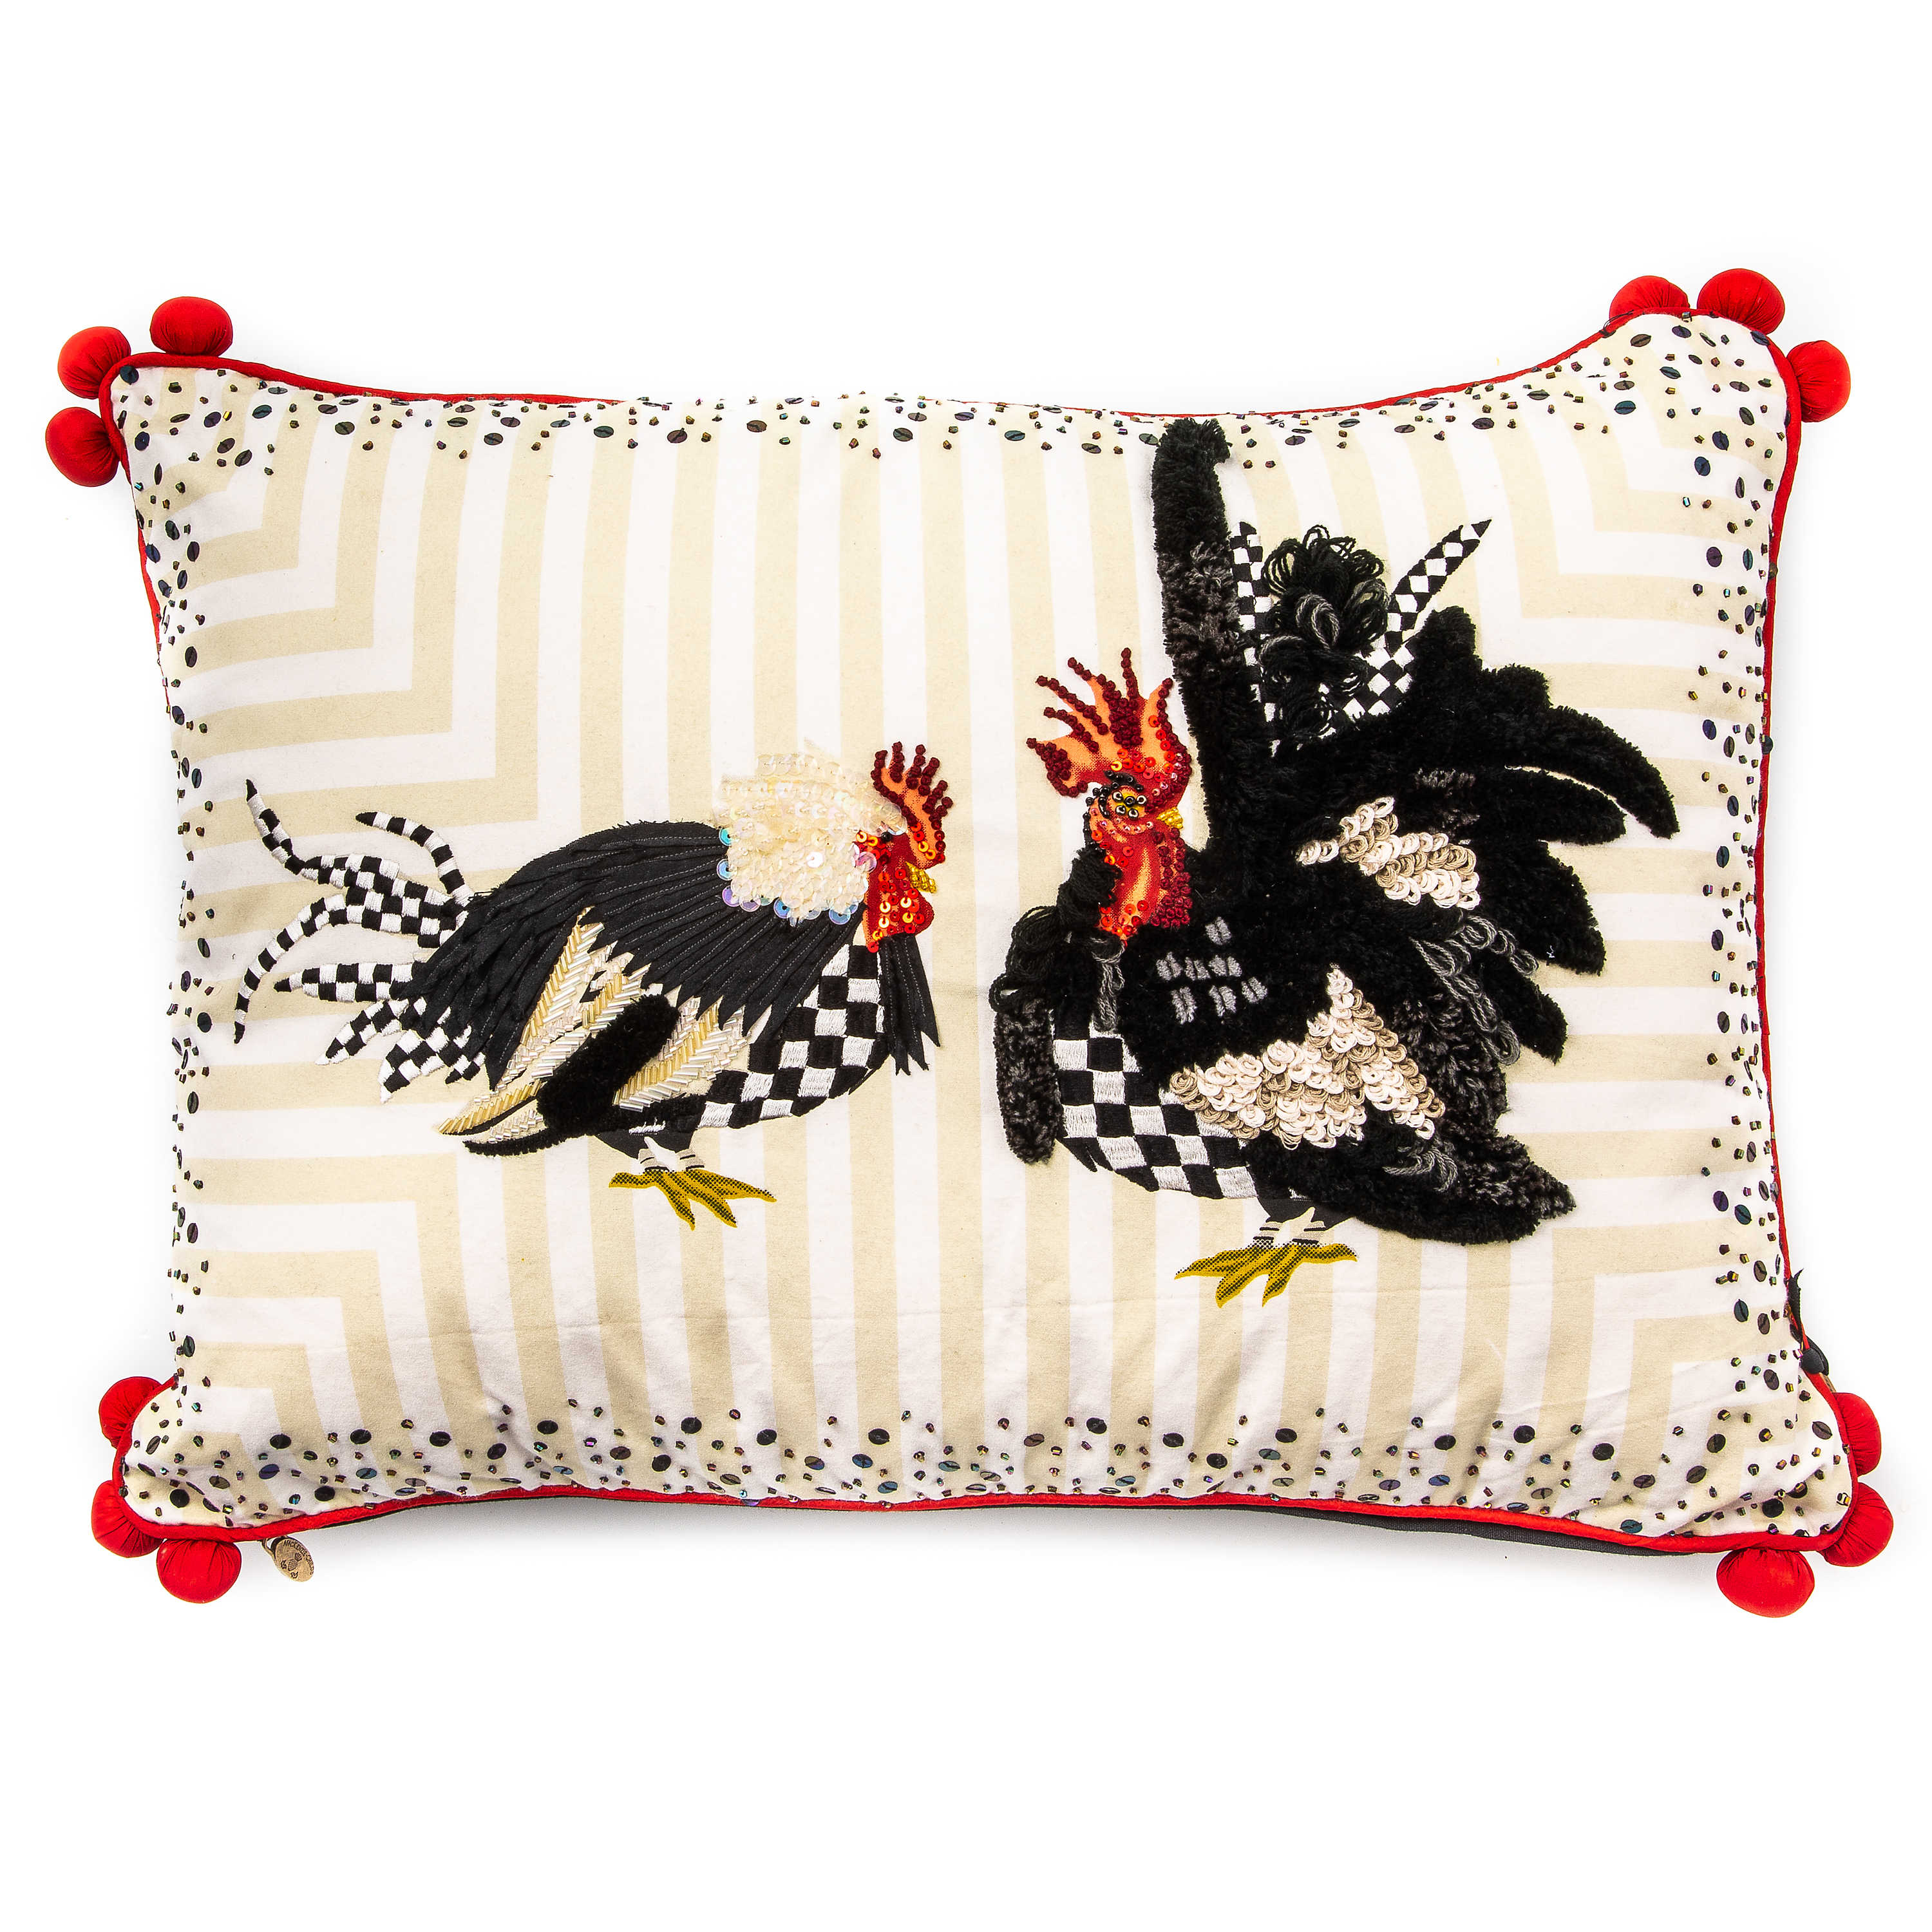 Chicken and Rooster Lumbar Pillow mackenzie-childs Panama 0